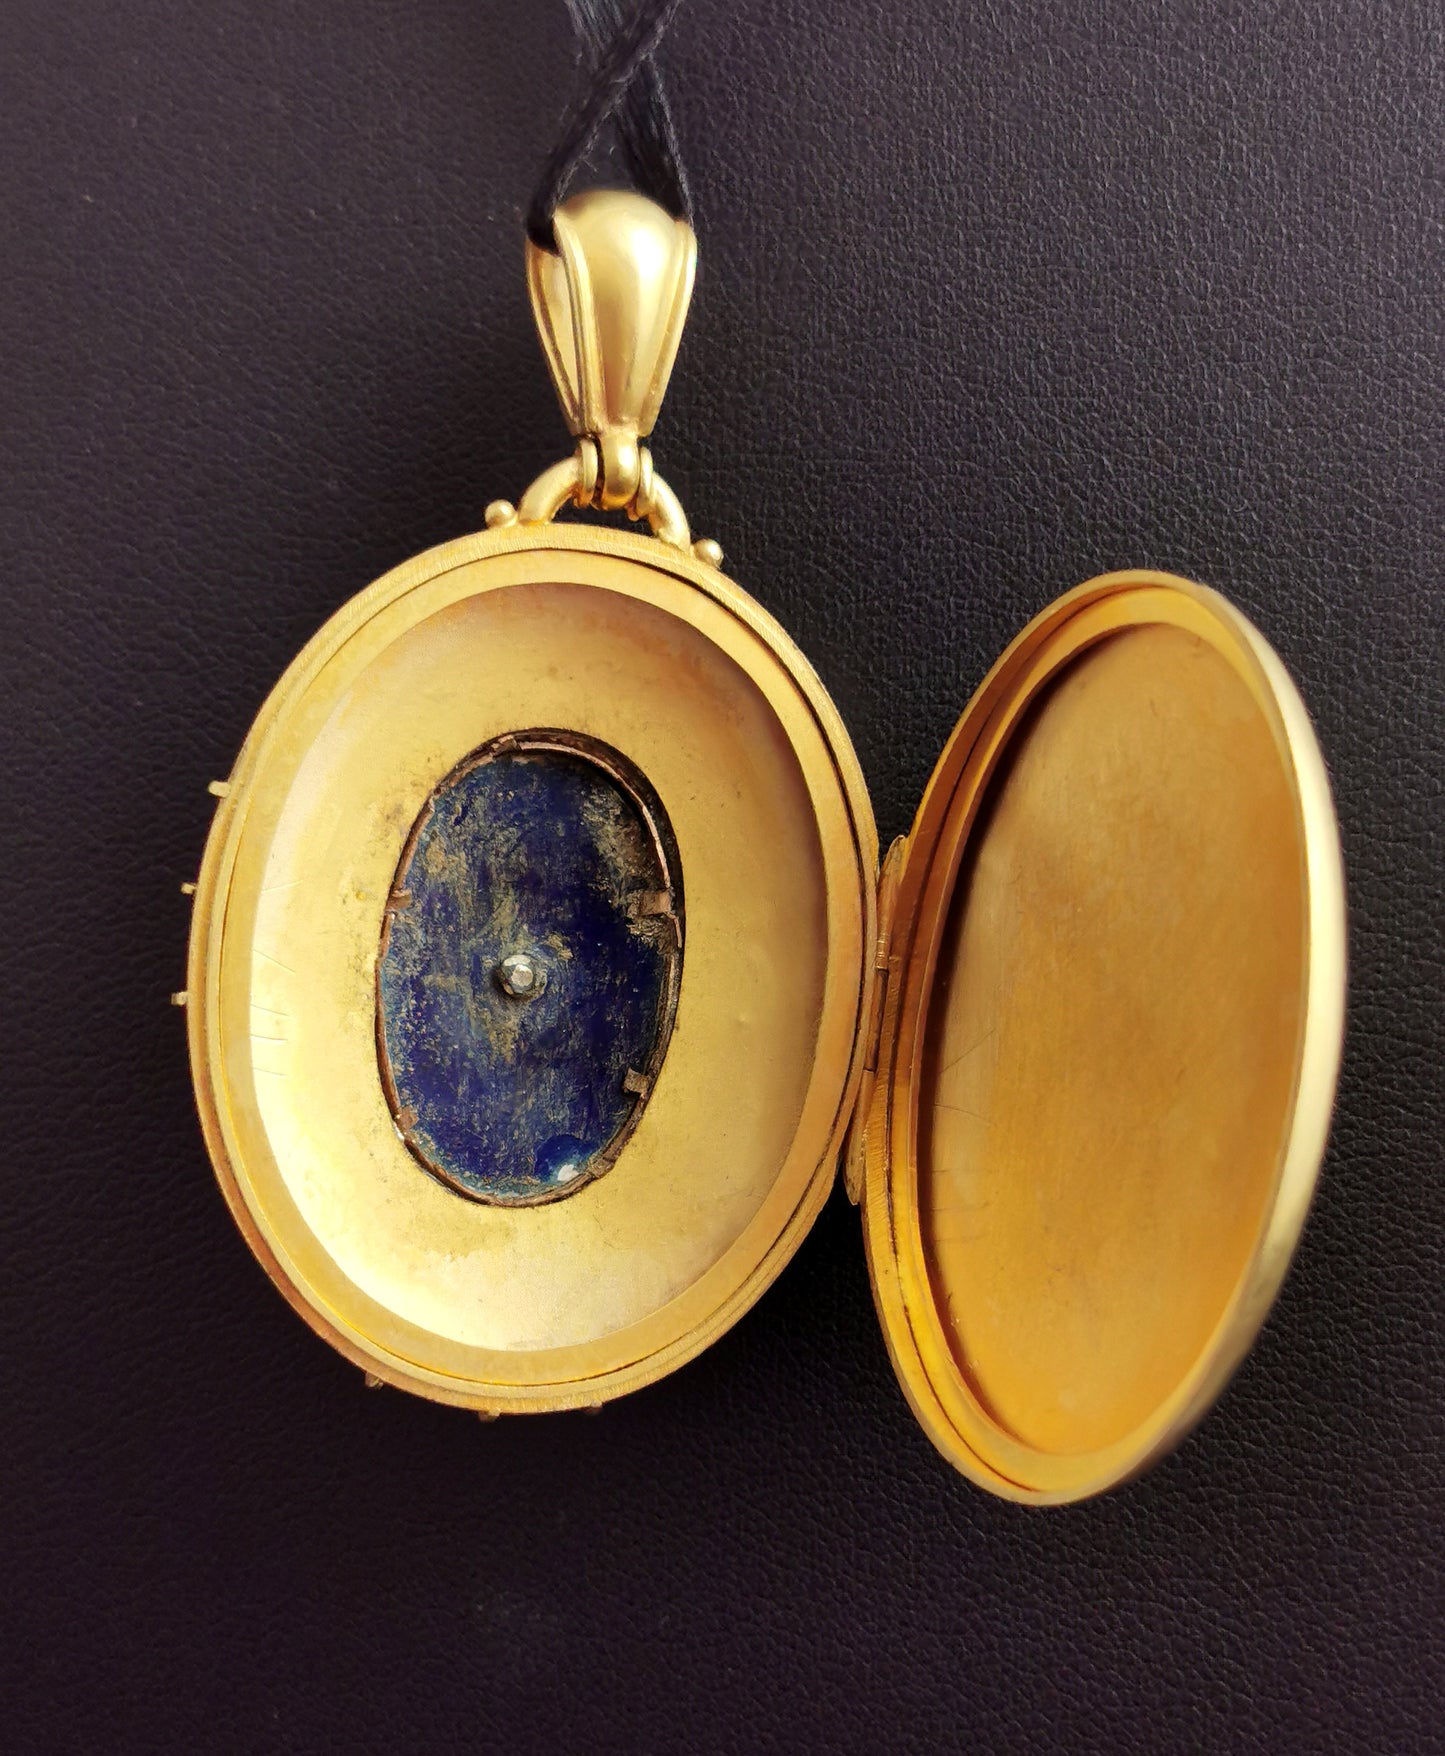 Antique Victorian 18ct gold Diamond and Blue enamel locket pendant